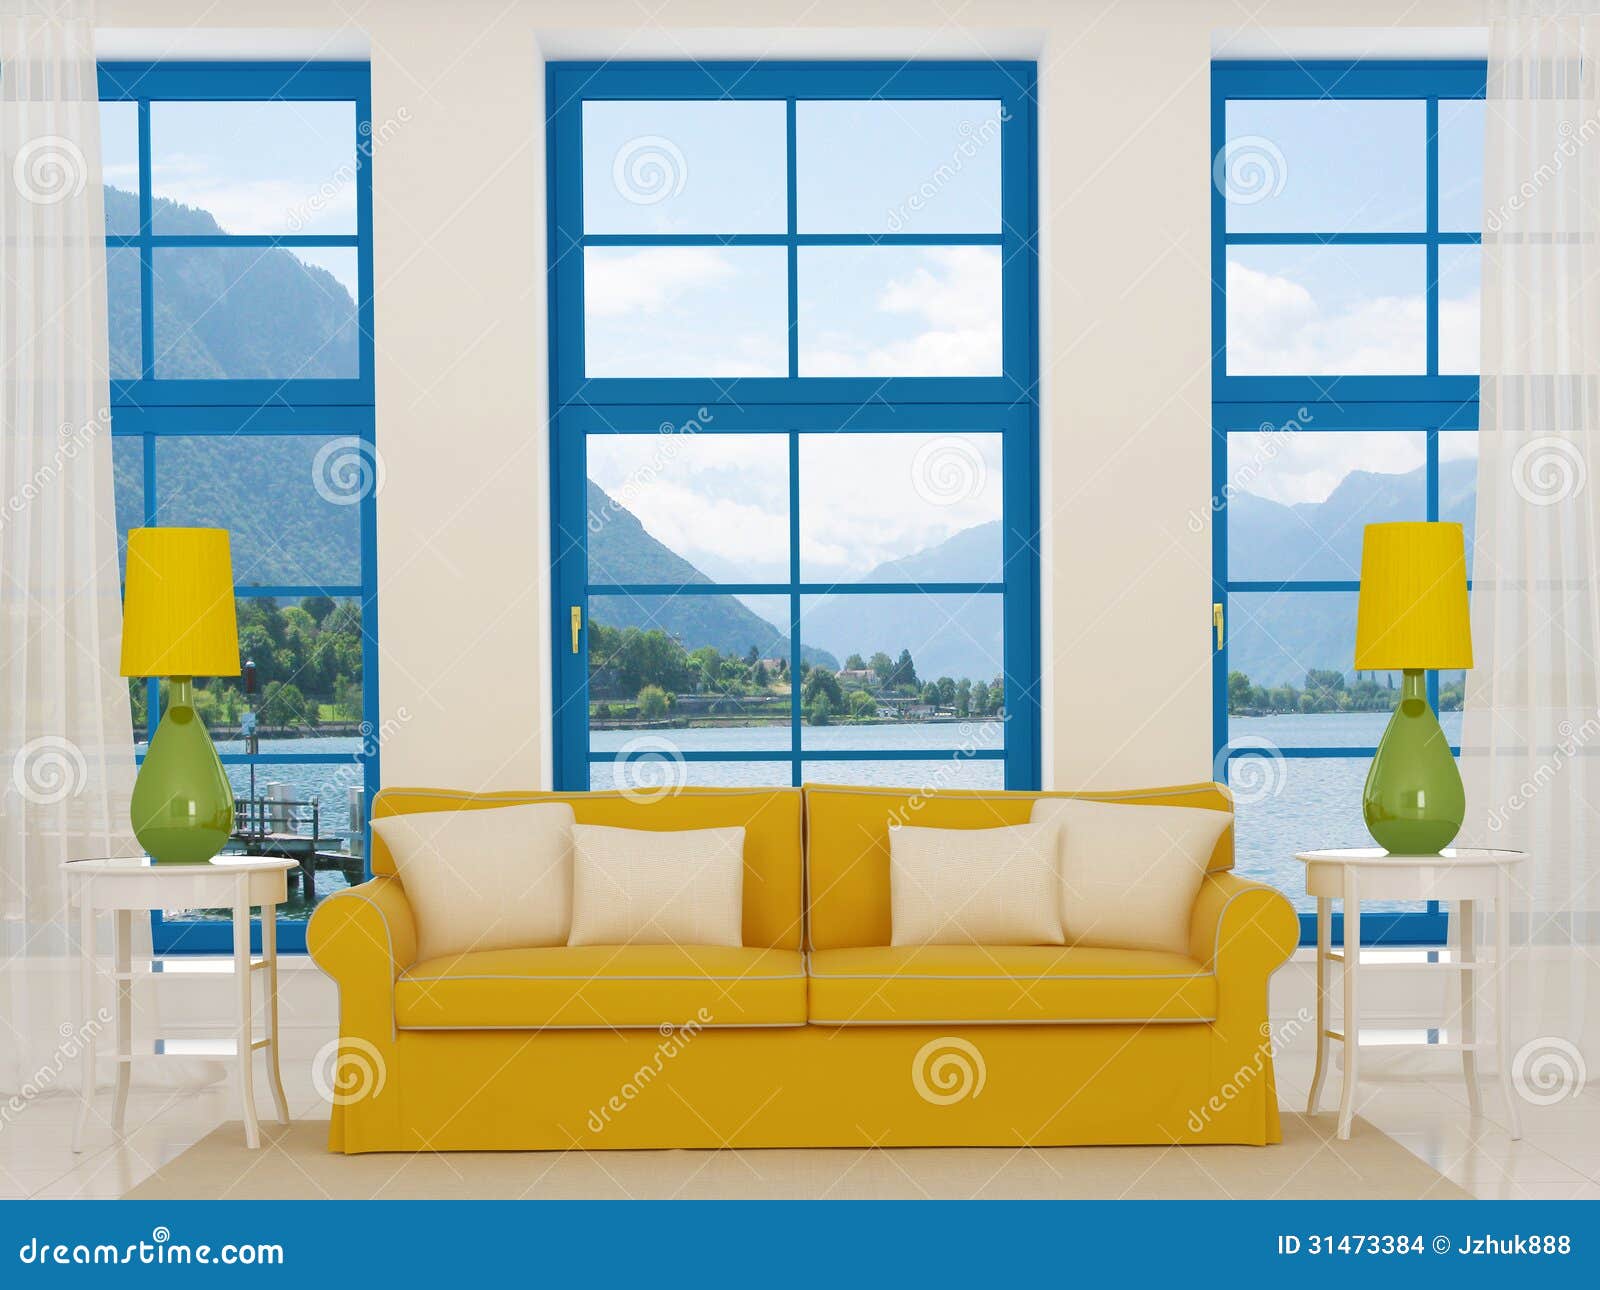 Bright Interior With Yellow Sofa Stock Photo Image Of